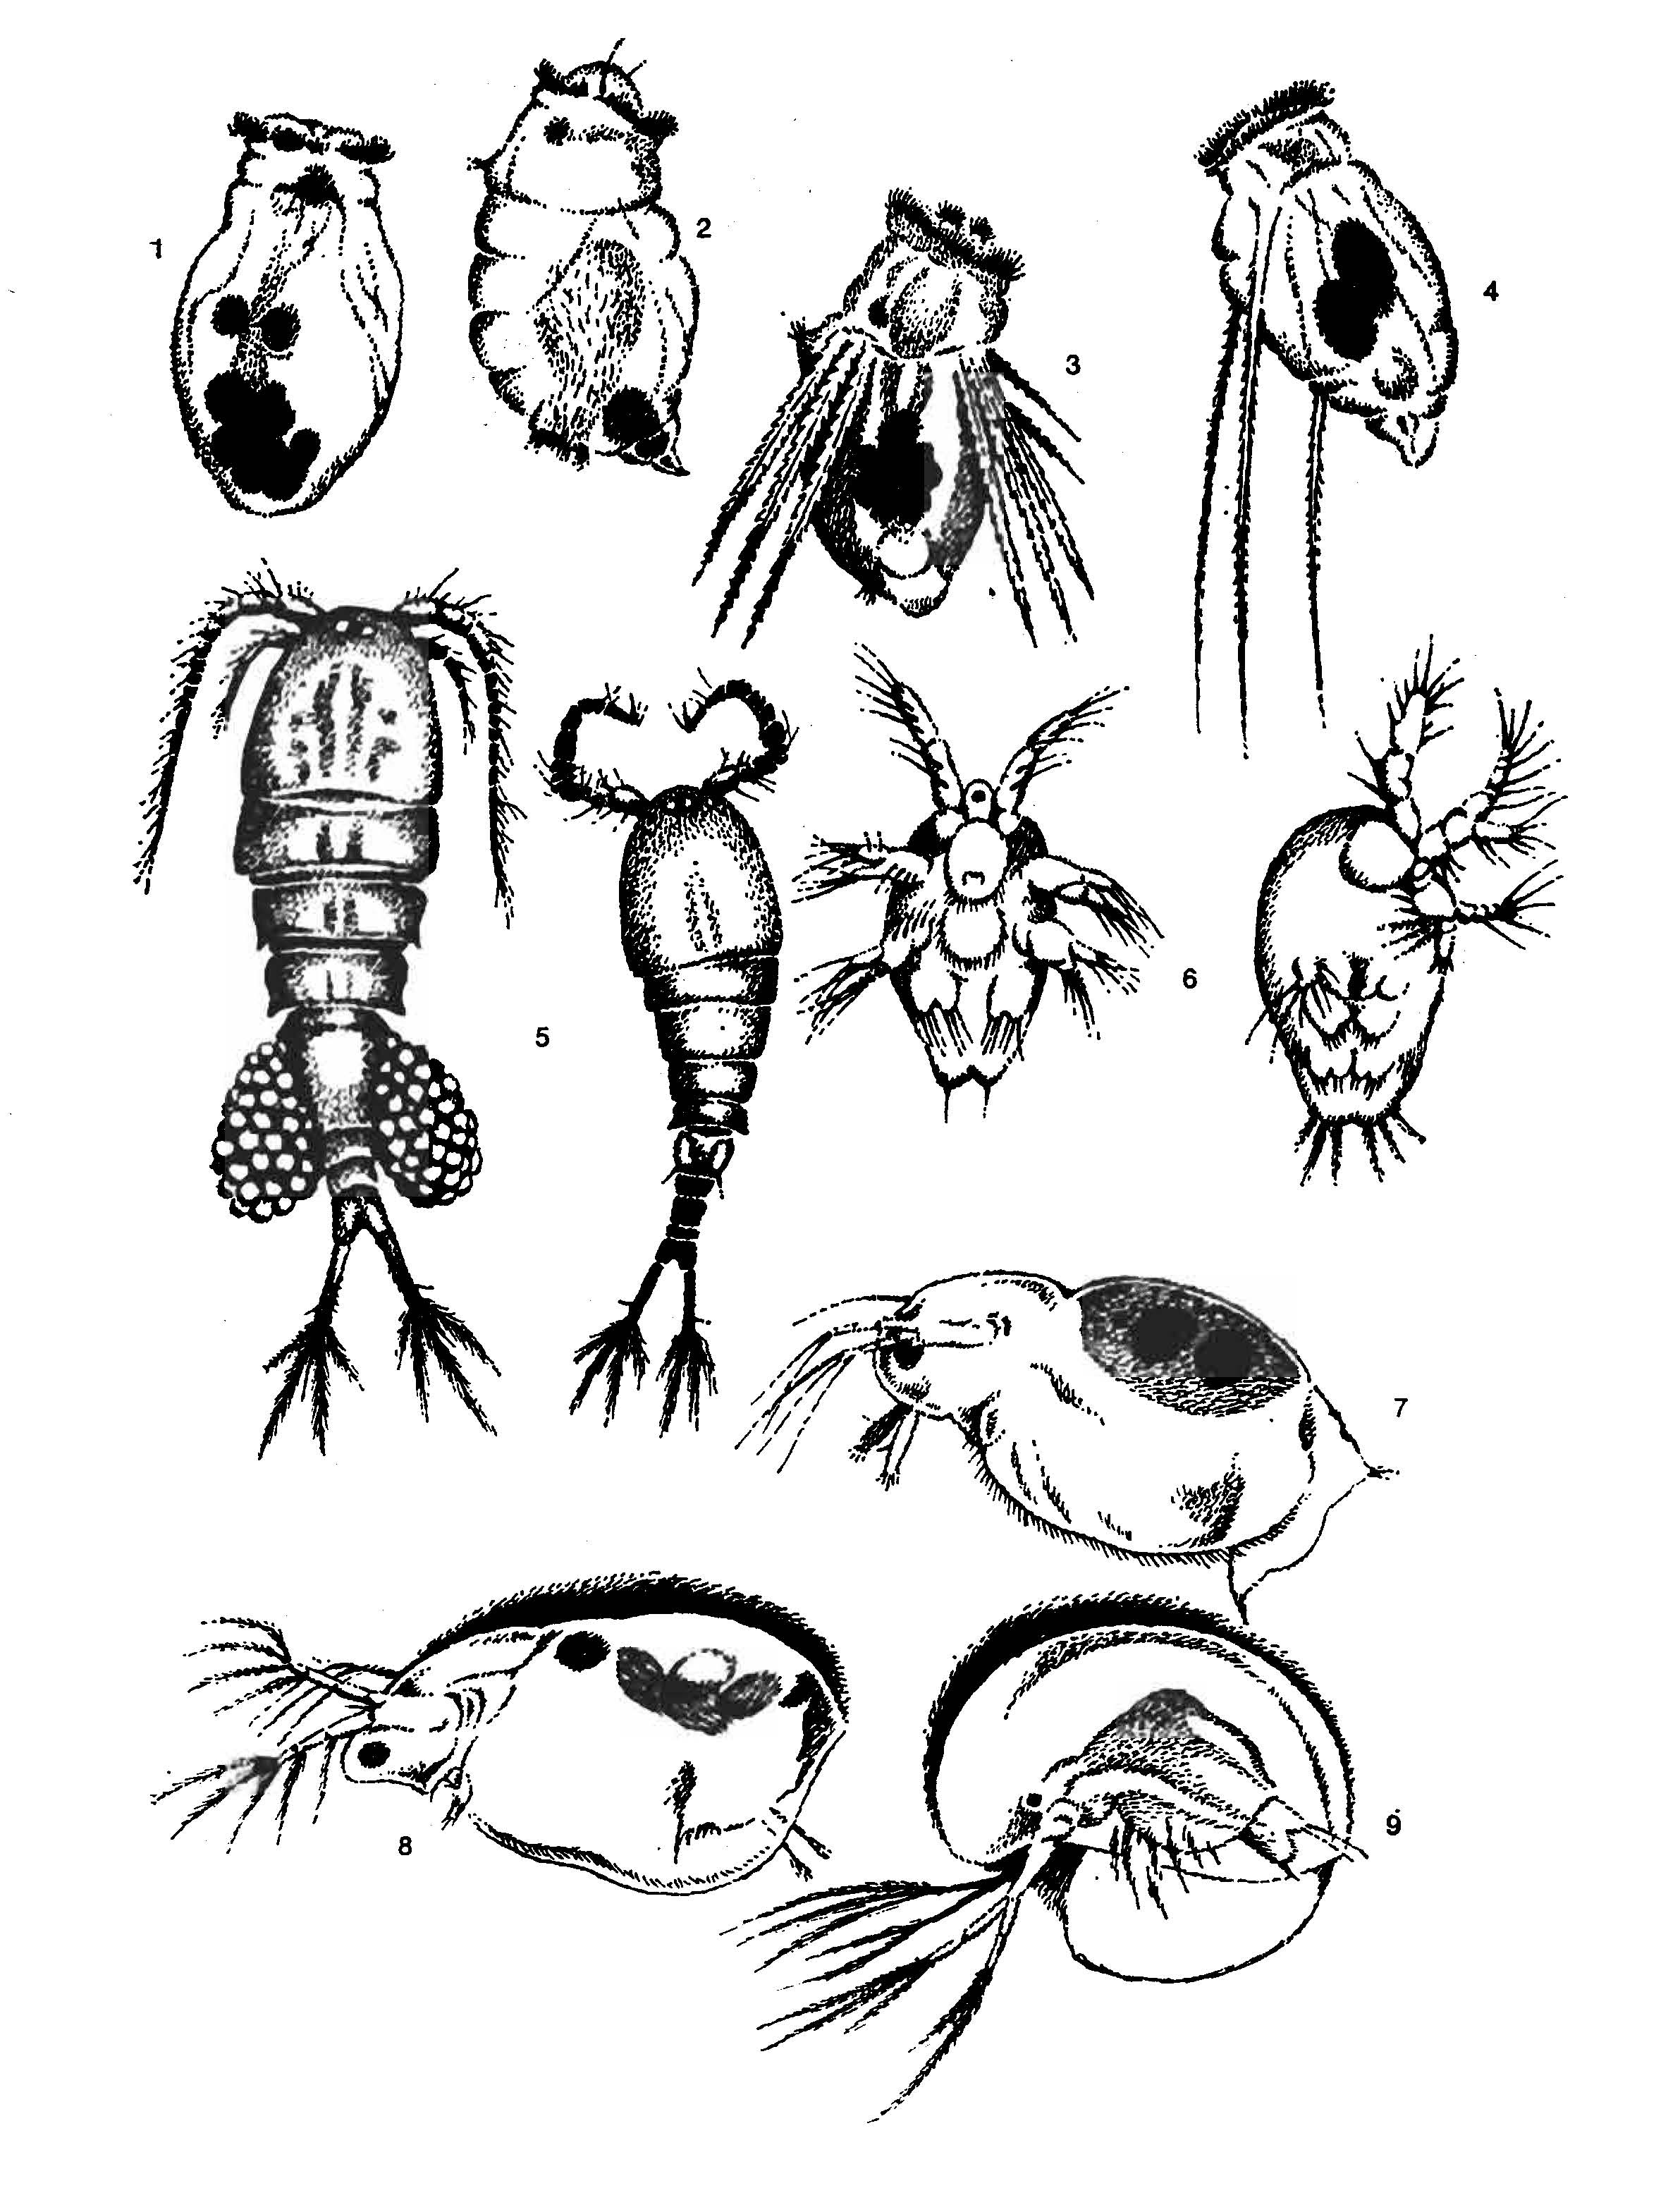 zooplankton clipart - photo #24